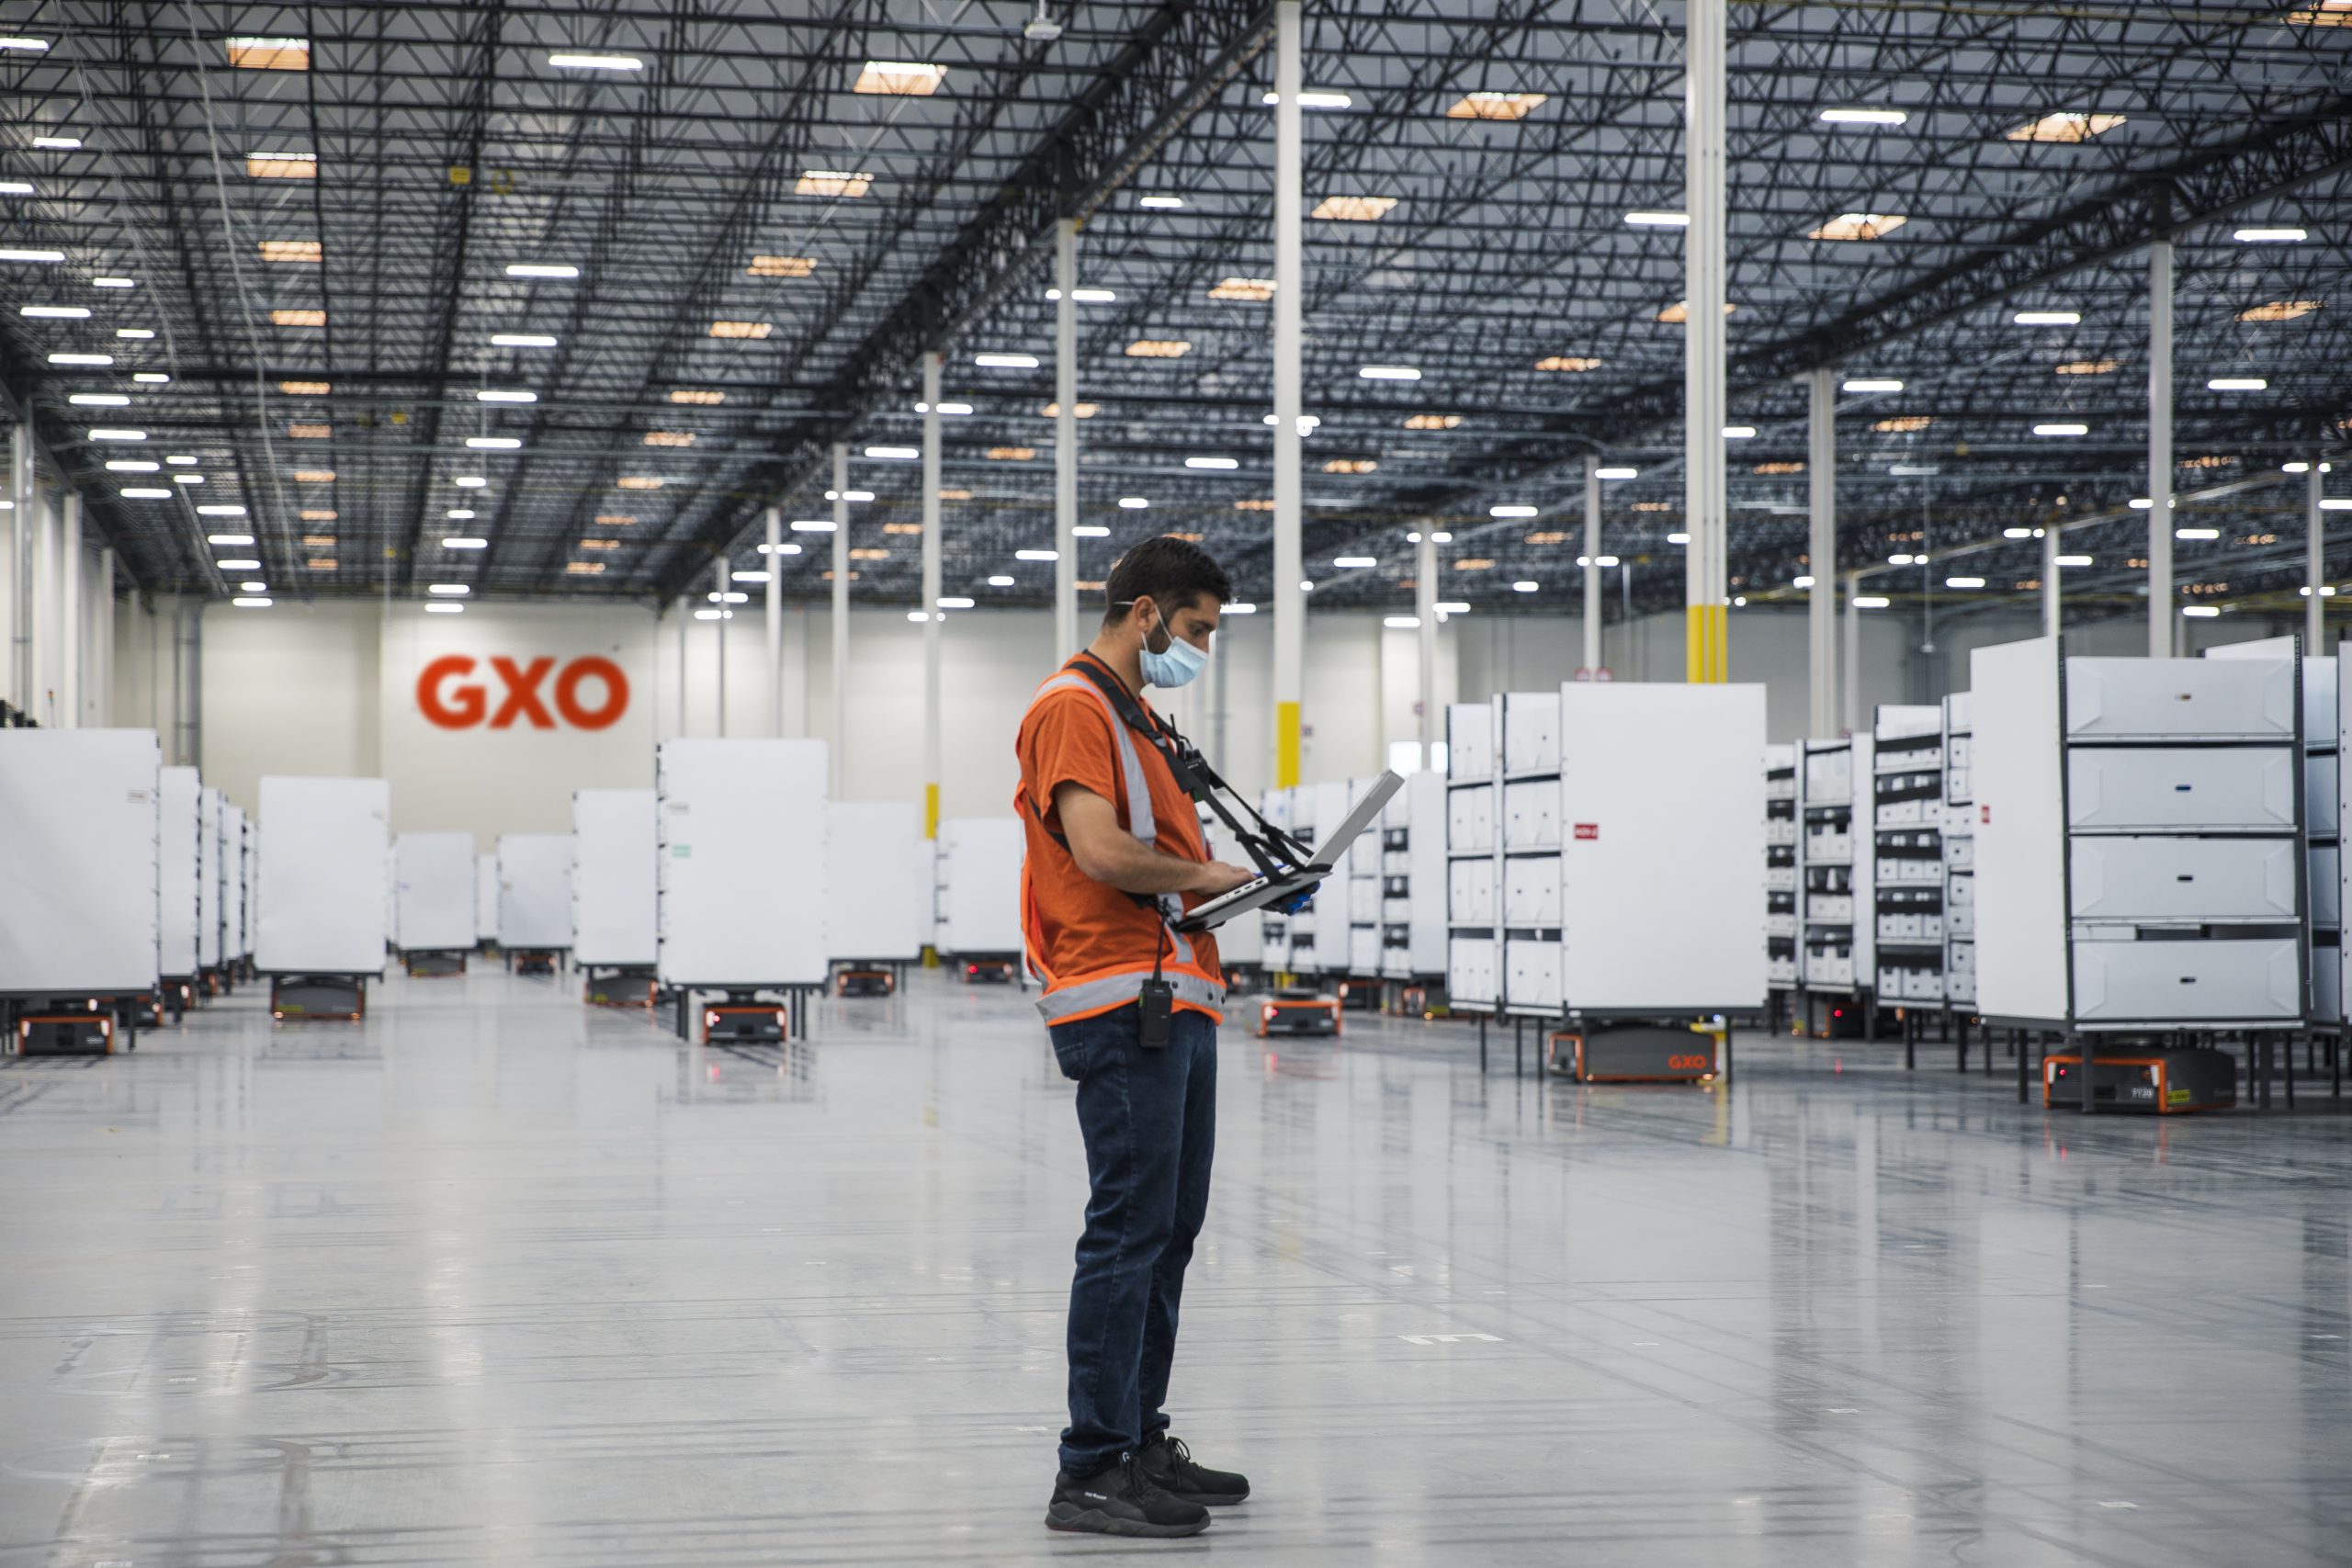 GXO employee in warehouse